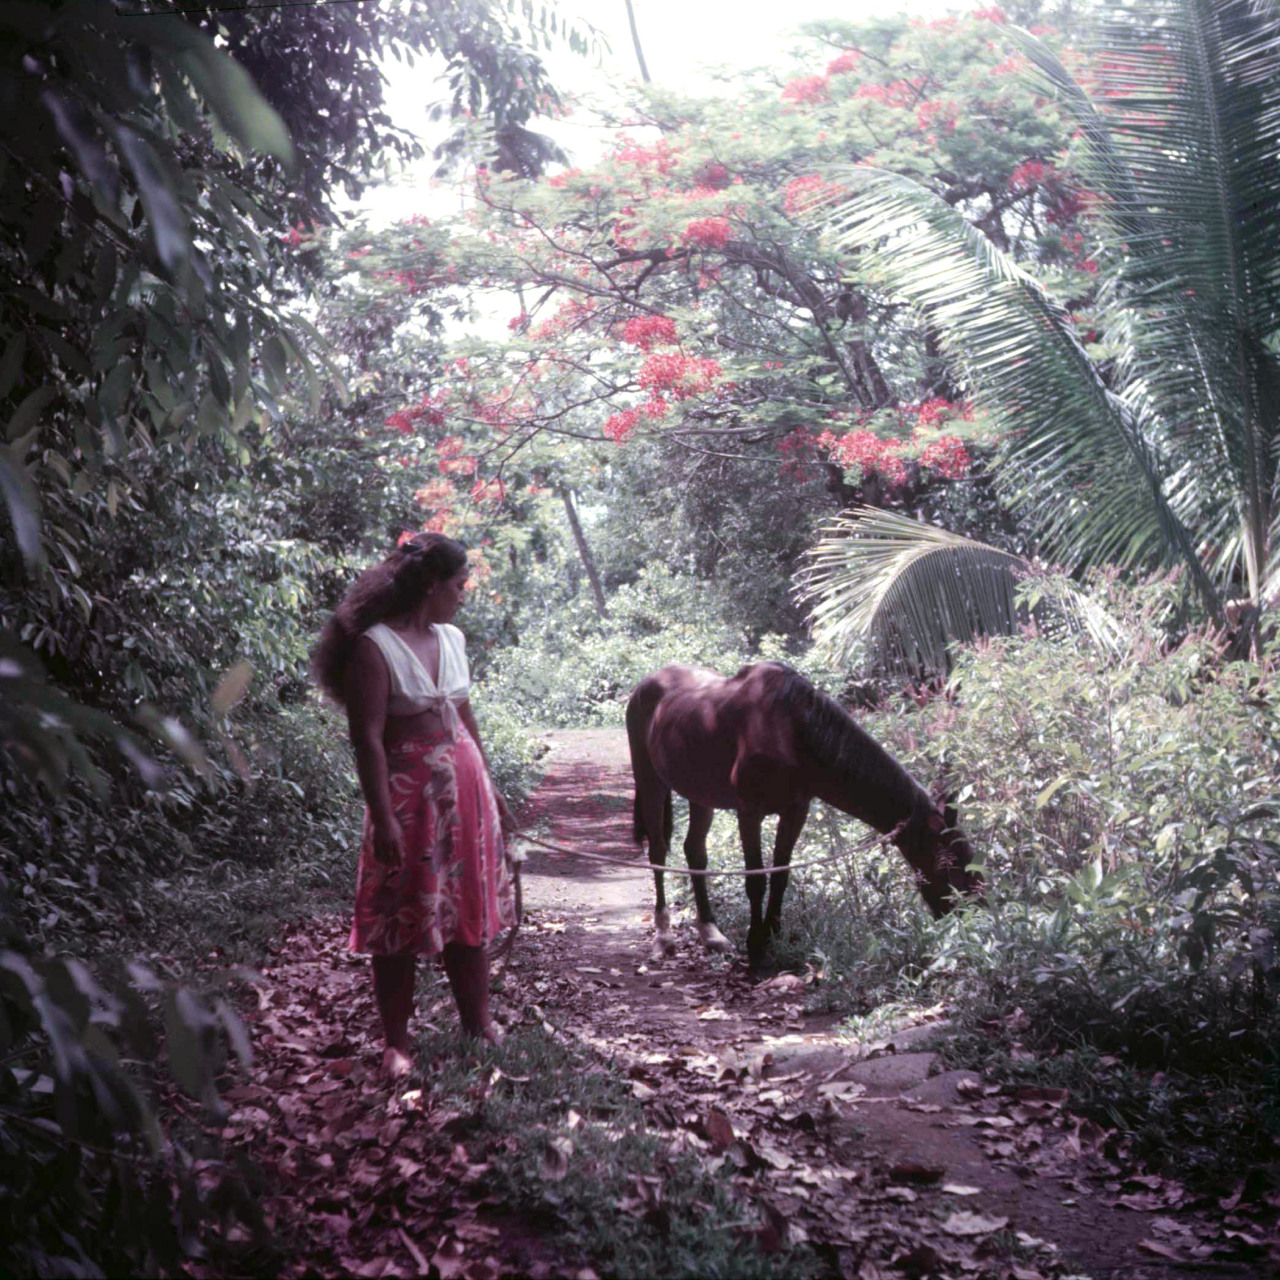 A Tahitian woman walking her horse through the jungle, Eliot Elisofon, circa 1954 #photography#vintage#vintage photography#eliot elisofon#1950s#color photography#tahiti#french polynesia#horses